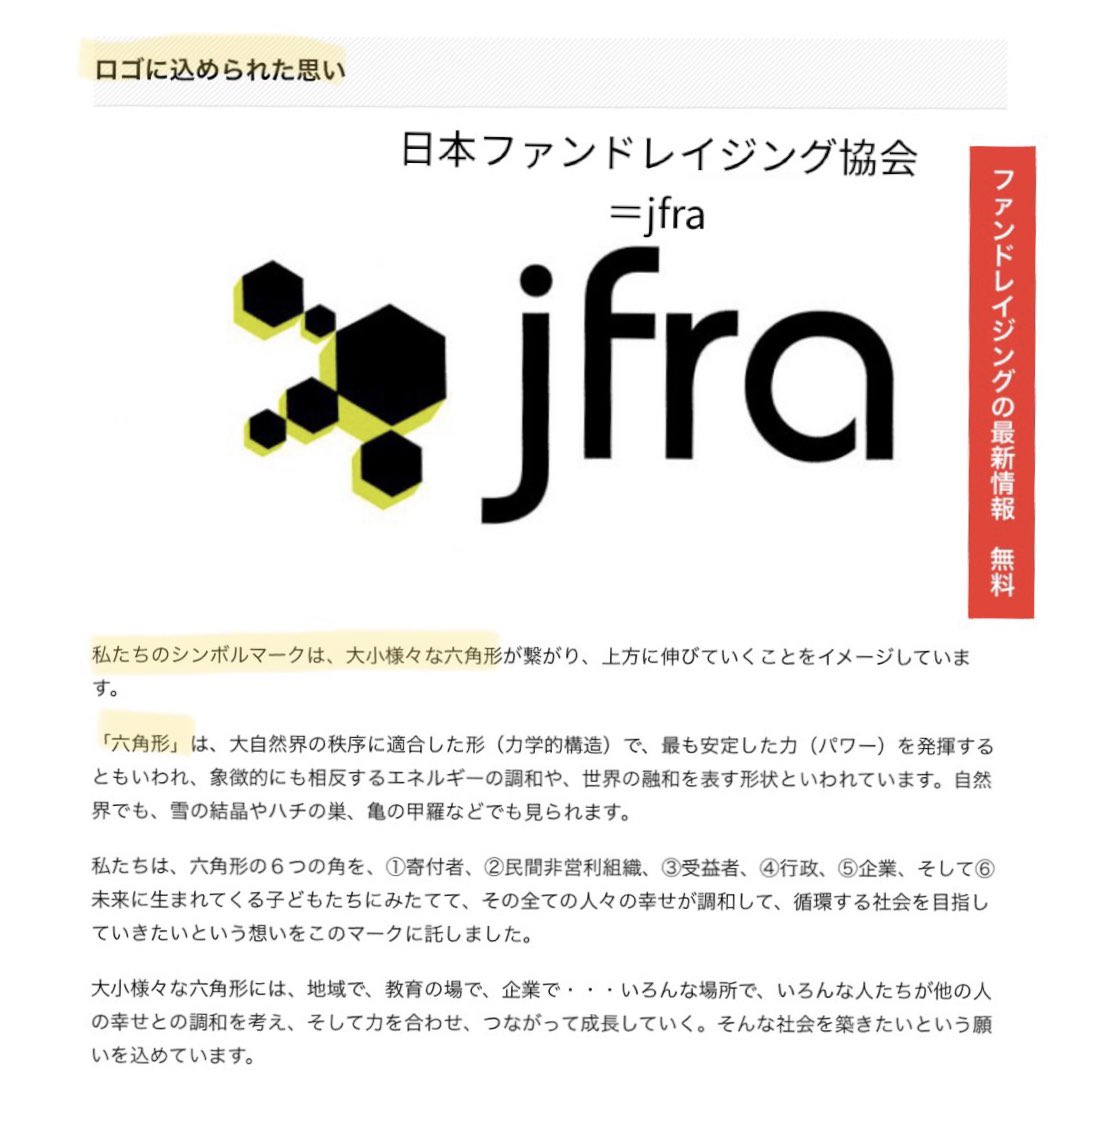 Hatena Antenna 日本ファンドレイジング協会 Jfra のロゴが六角形 T Co Iijnlf1biu 六角形の意味 T Co Ttyt1rpssc Jfraの10周年ファウンダーに Dmm Yahoo Japanネット募金 ビジョンパートナーにはソフトバンク代表 藤沢久美